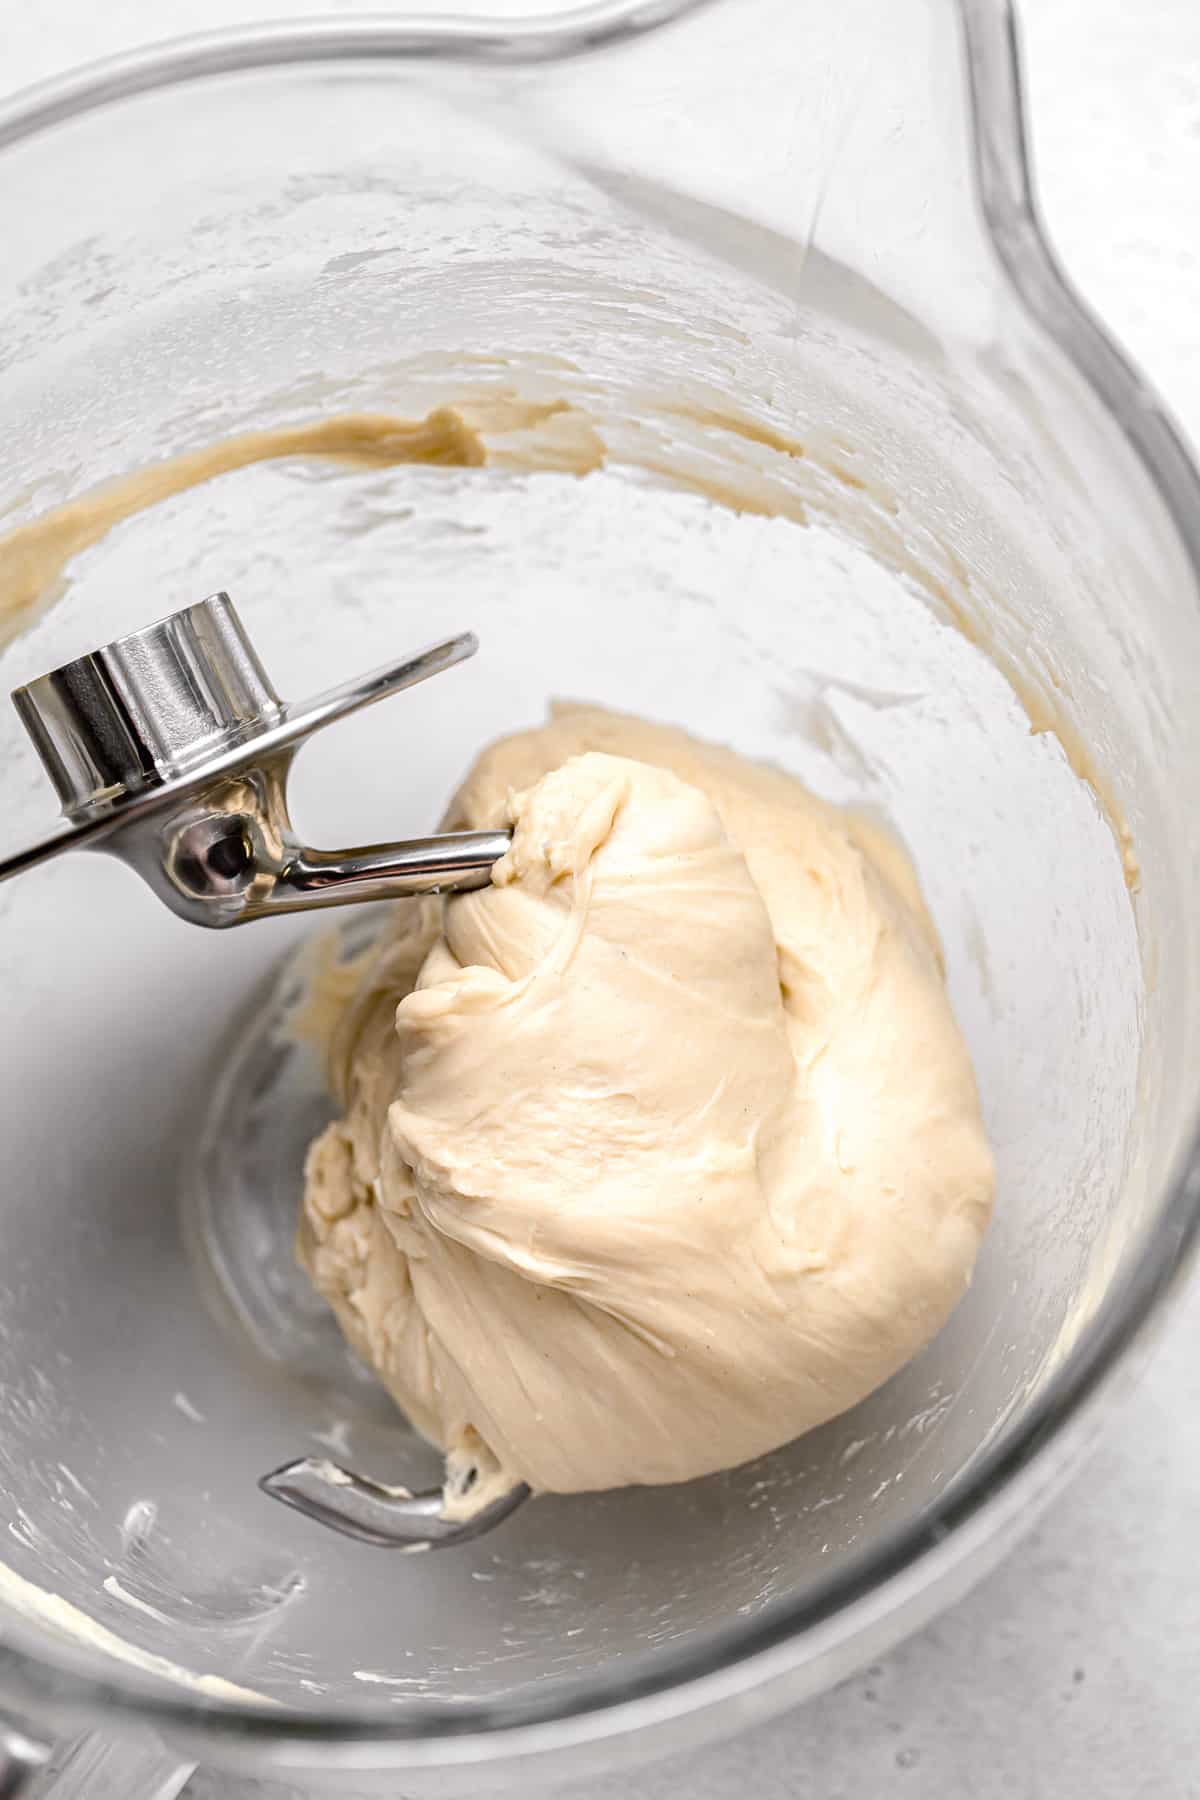 milk bread dough in glass mixing bowl.